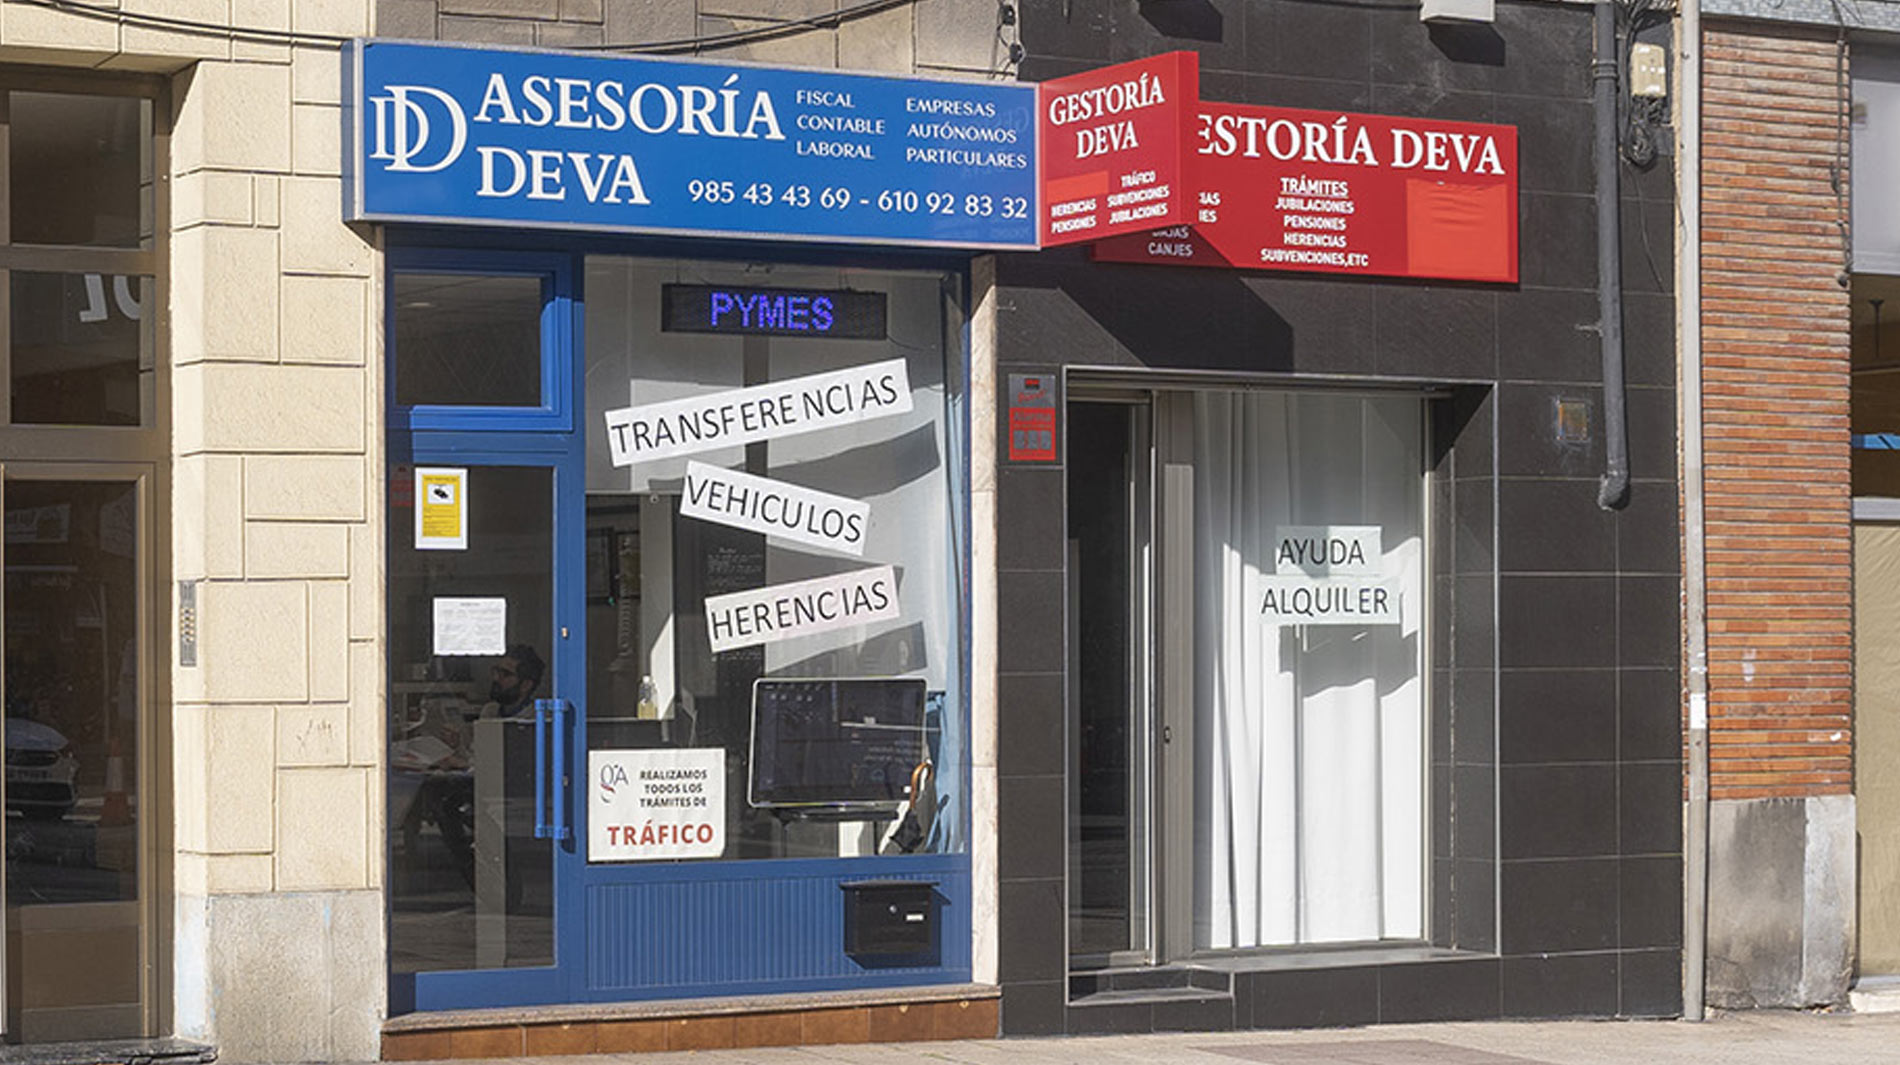 Asesoría Deva Oviedo - fachada